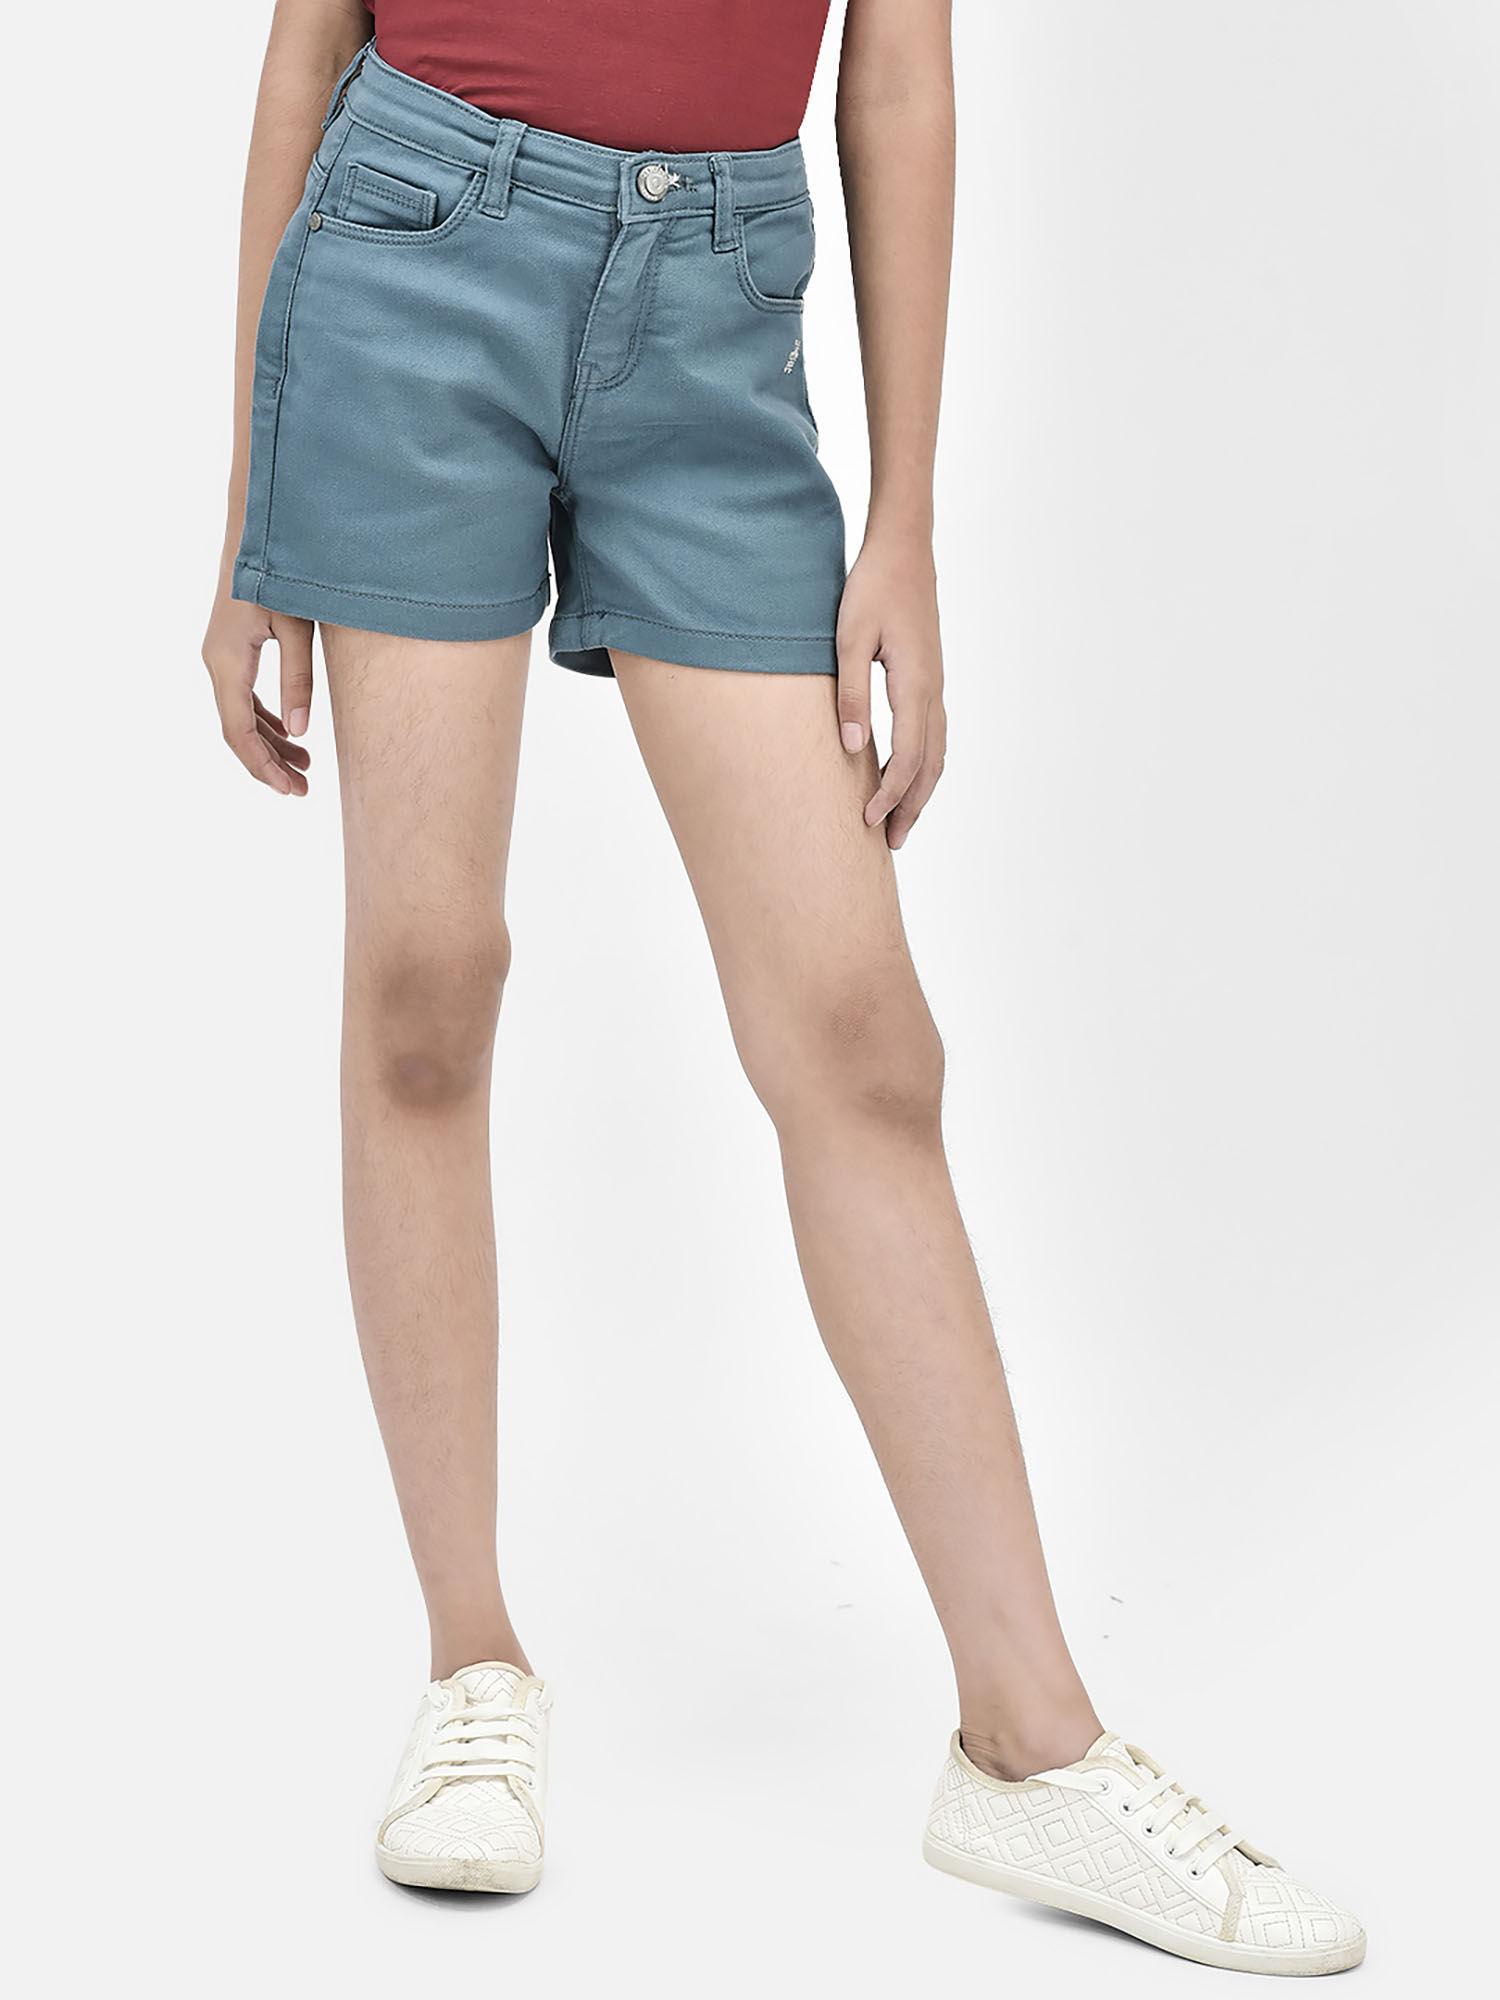 girls blue shorts